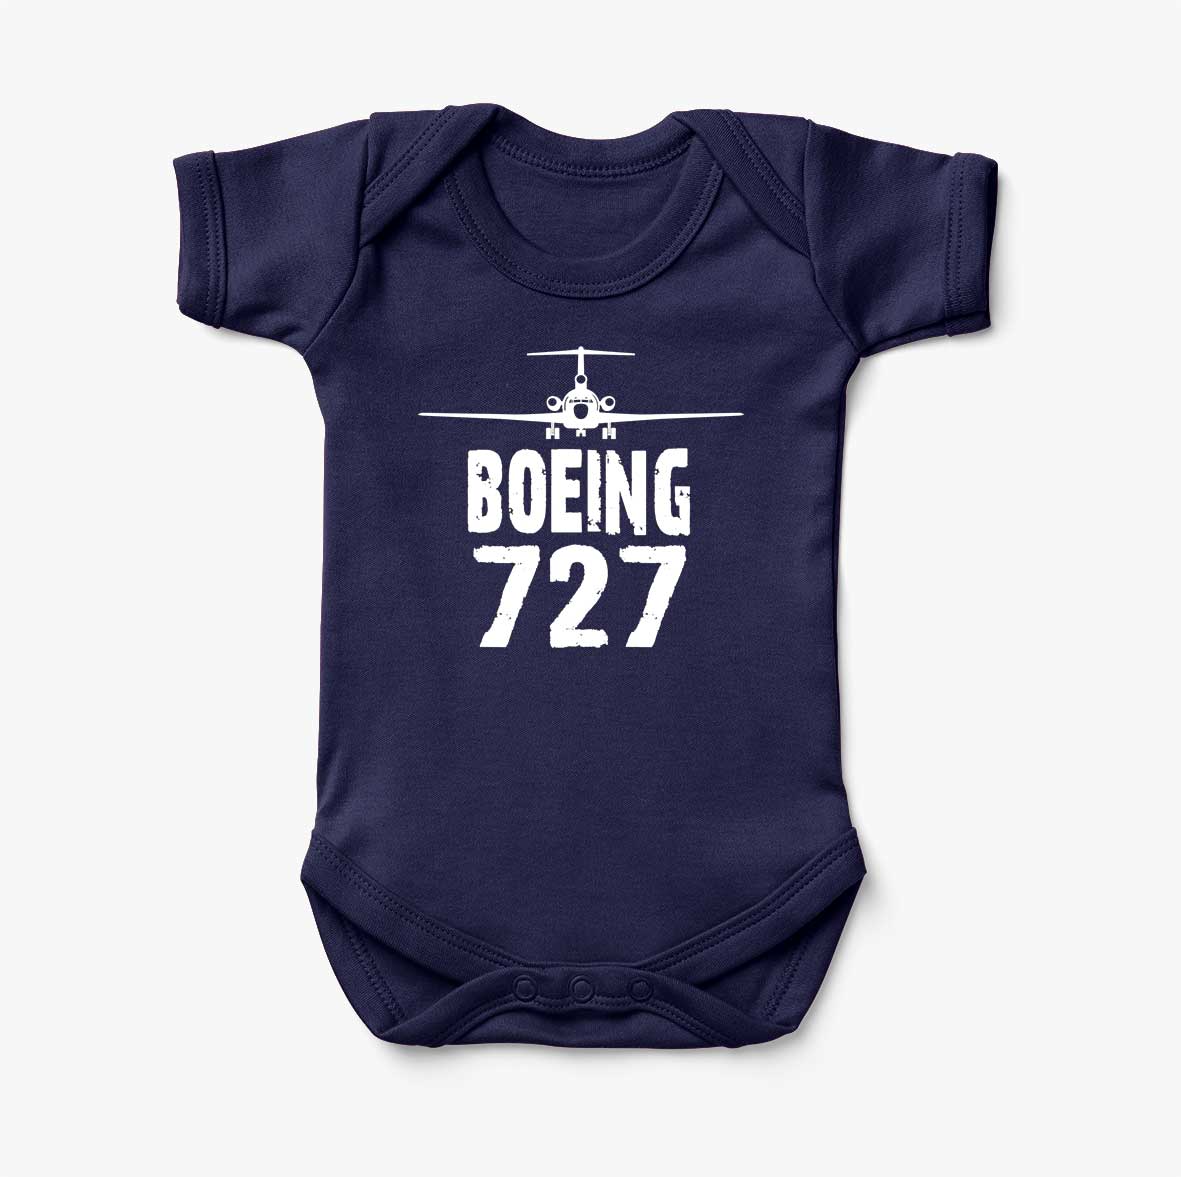 Boeing 727 & Plane Designed Baby Bodysuits